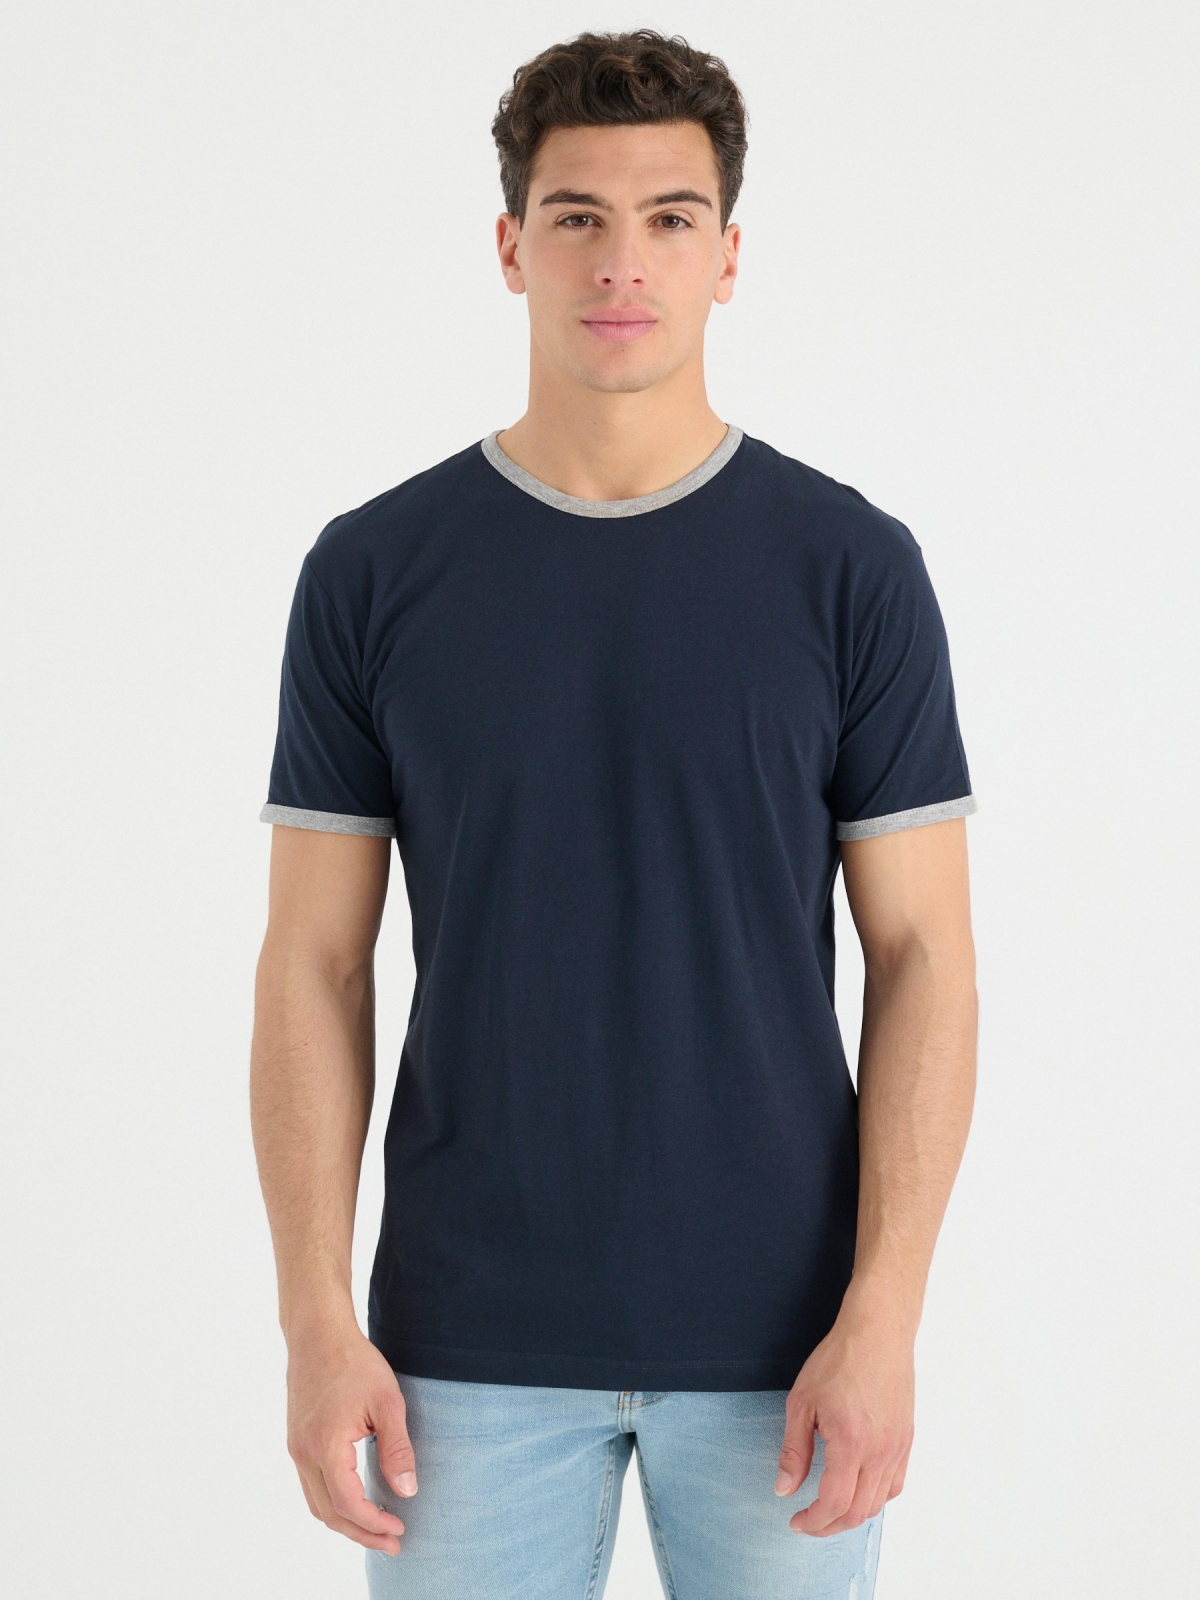 Camiseta básica contrastes azul marino vista media frontal